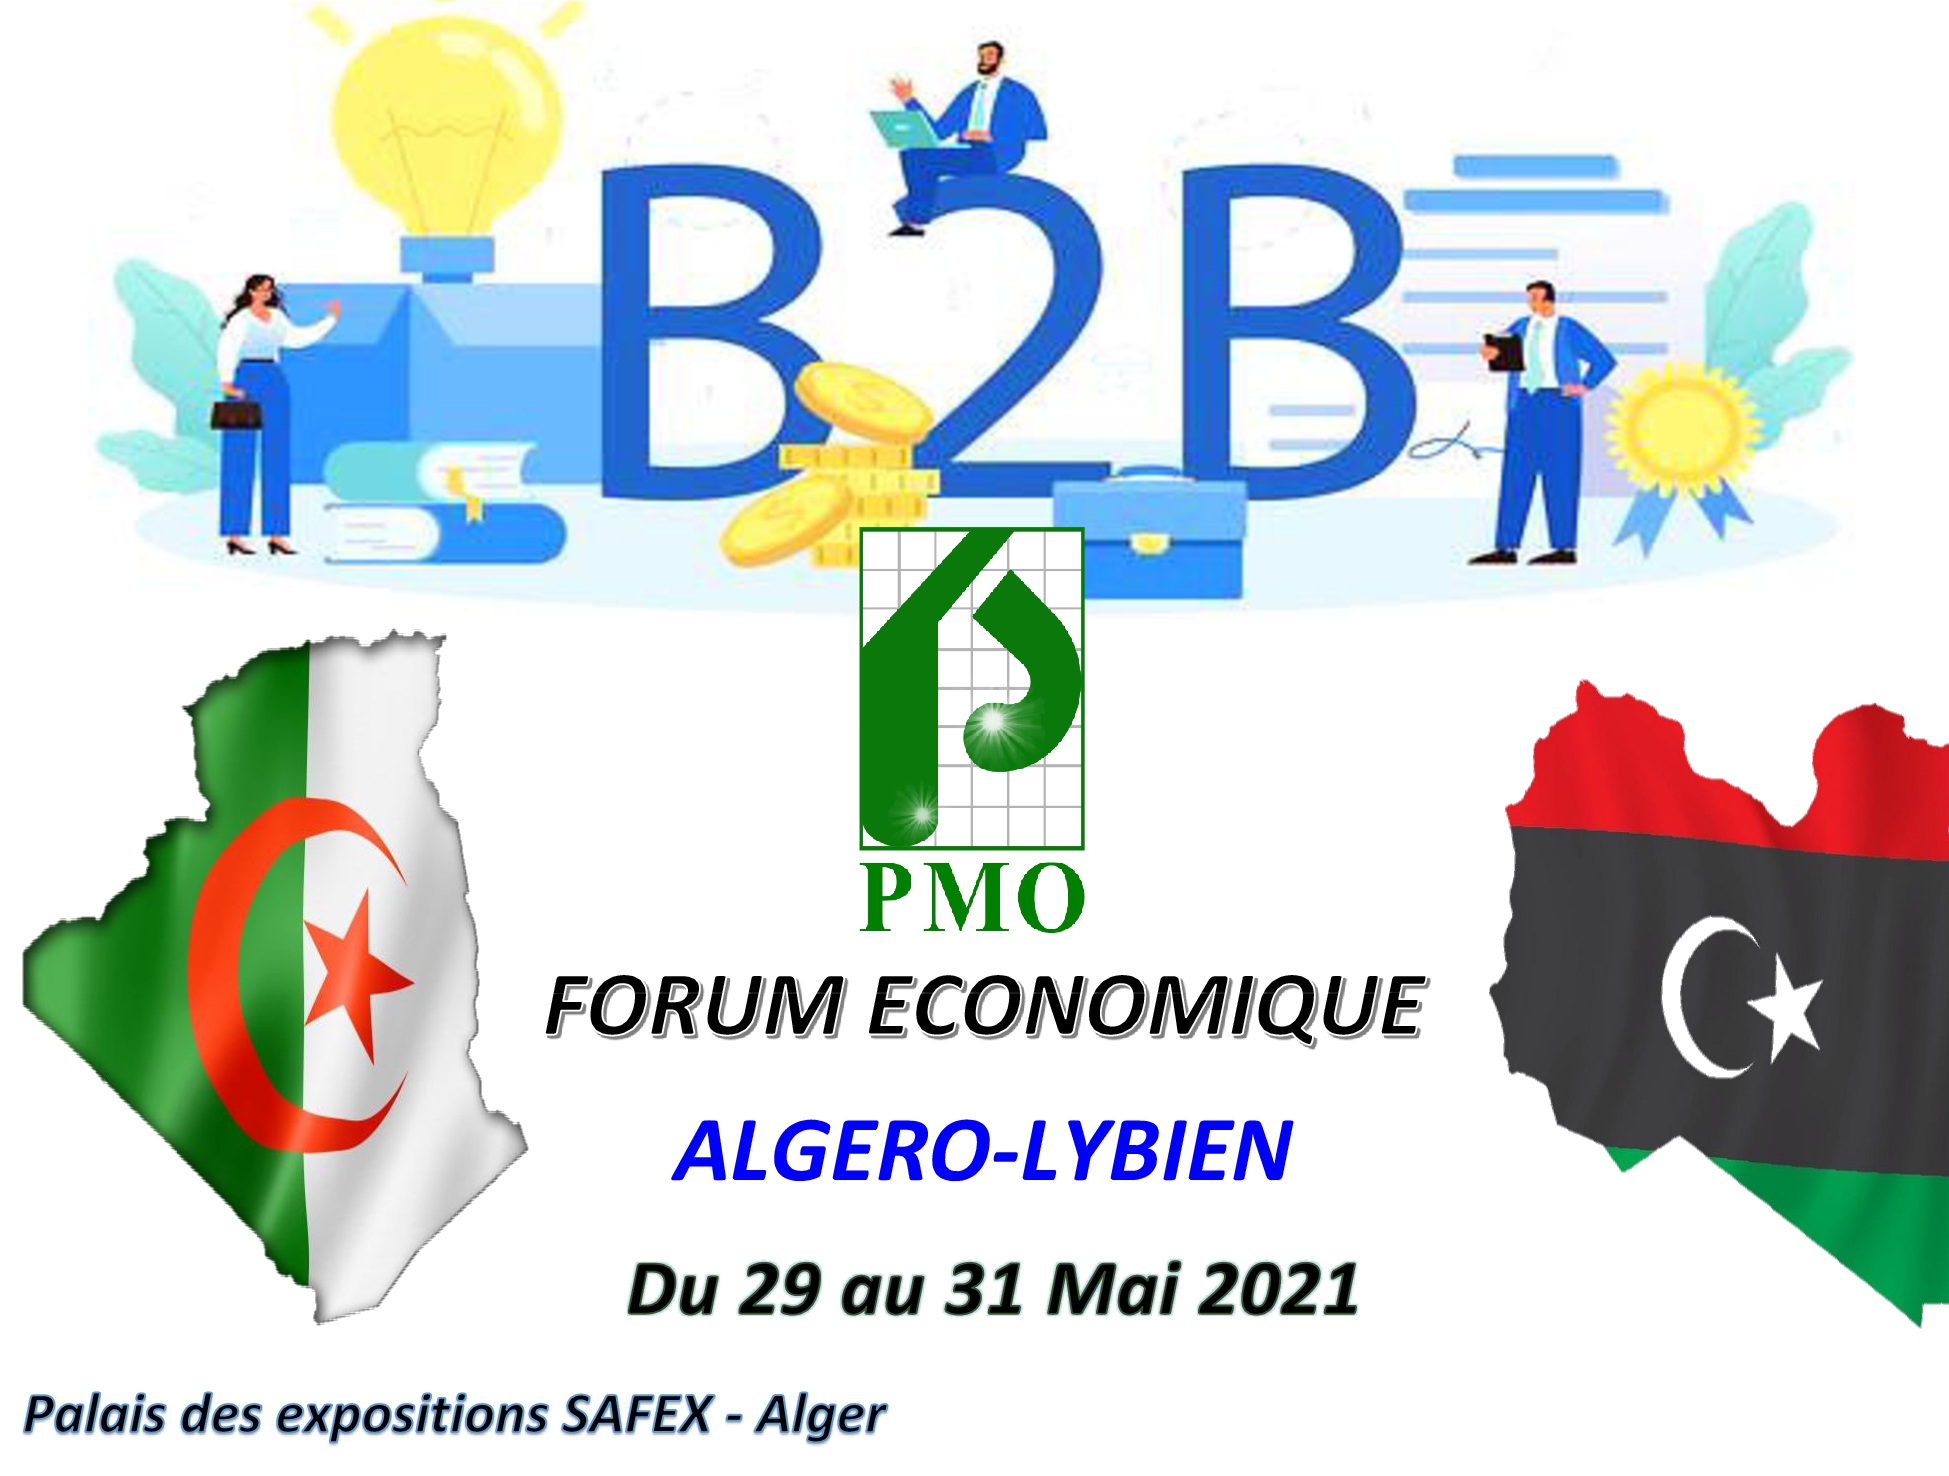 Forum économique ALGERO-LYBIEN